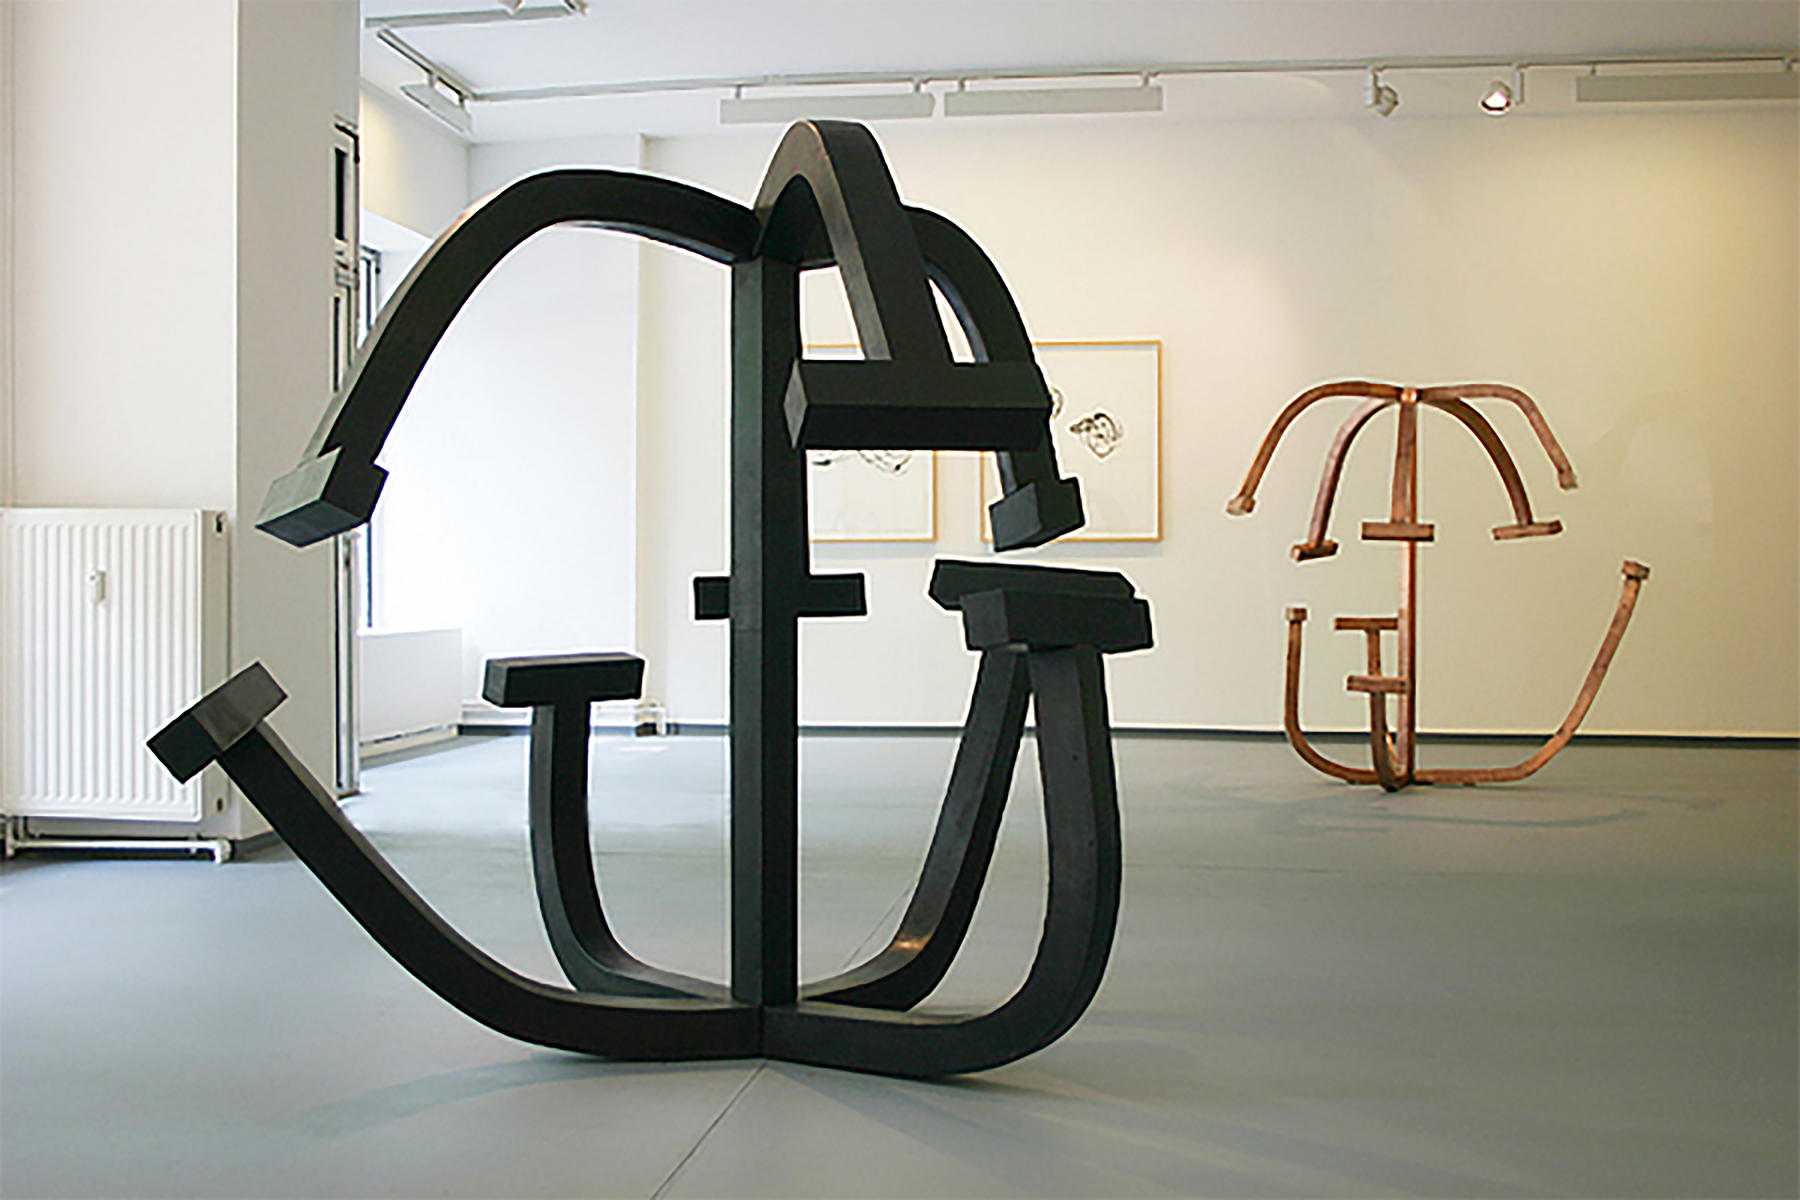 Distanzdialog        
Schultz Contemporary, Berlin, 2006
Bronze
72x64x60